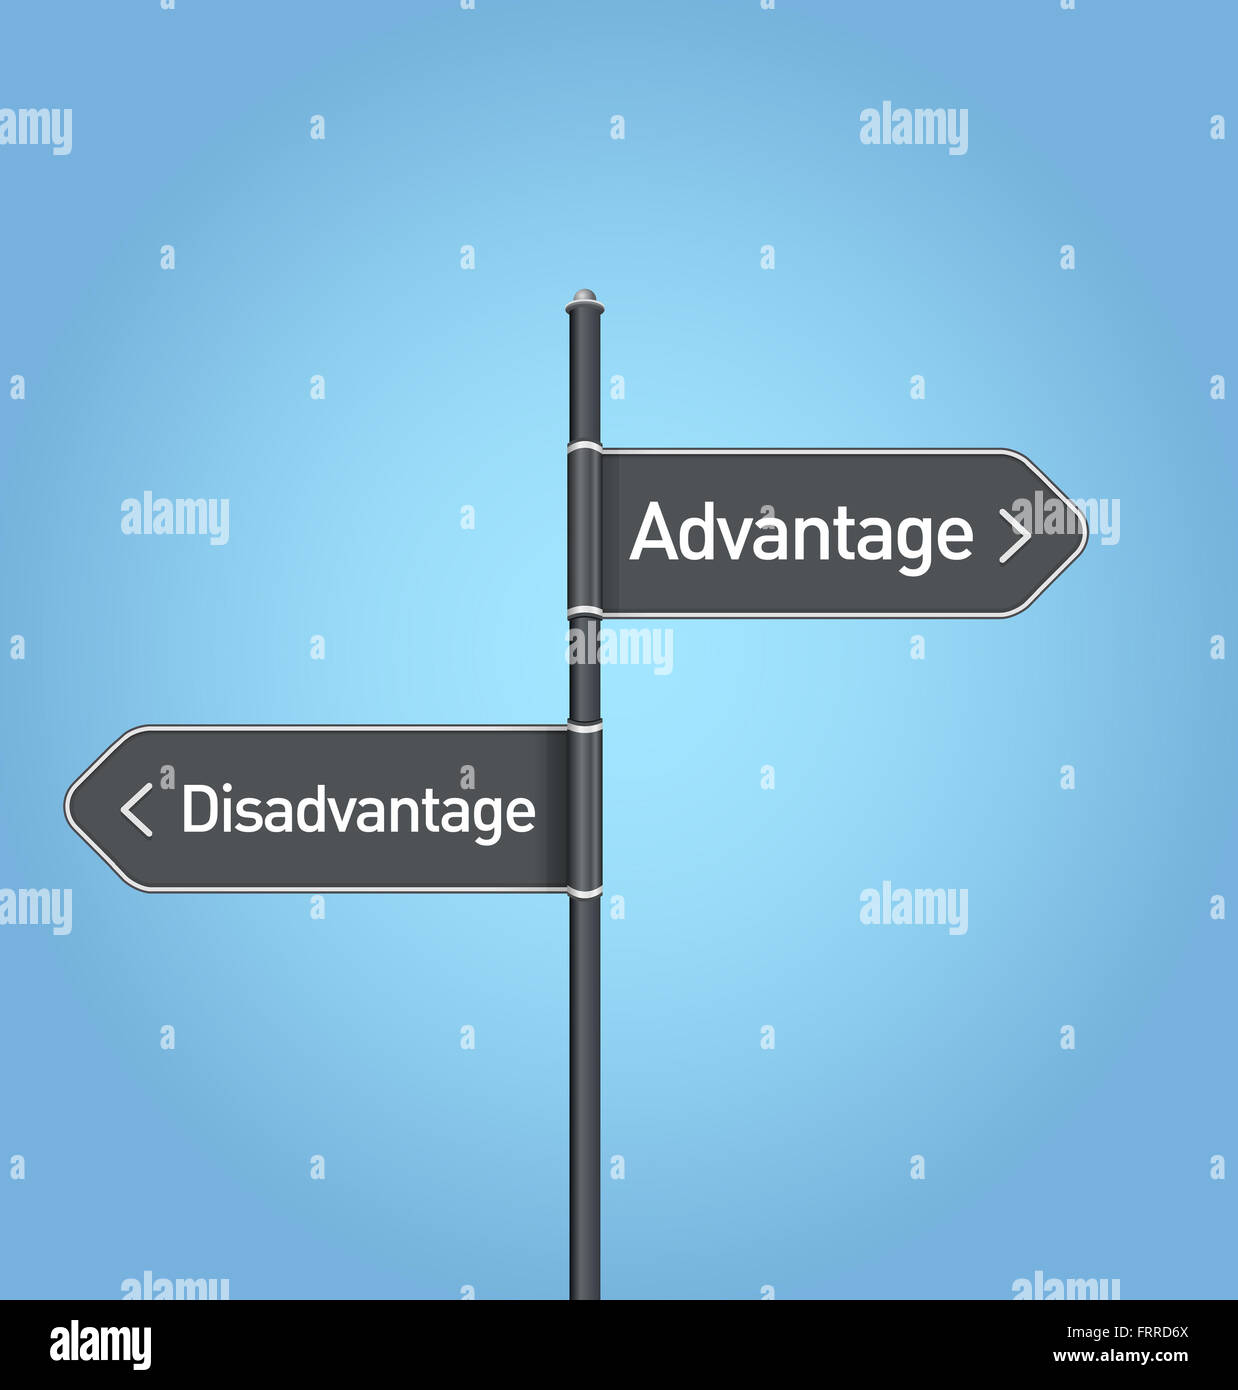 Advantage vs disadvantage choice road sign concept, flat design Stock Photo